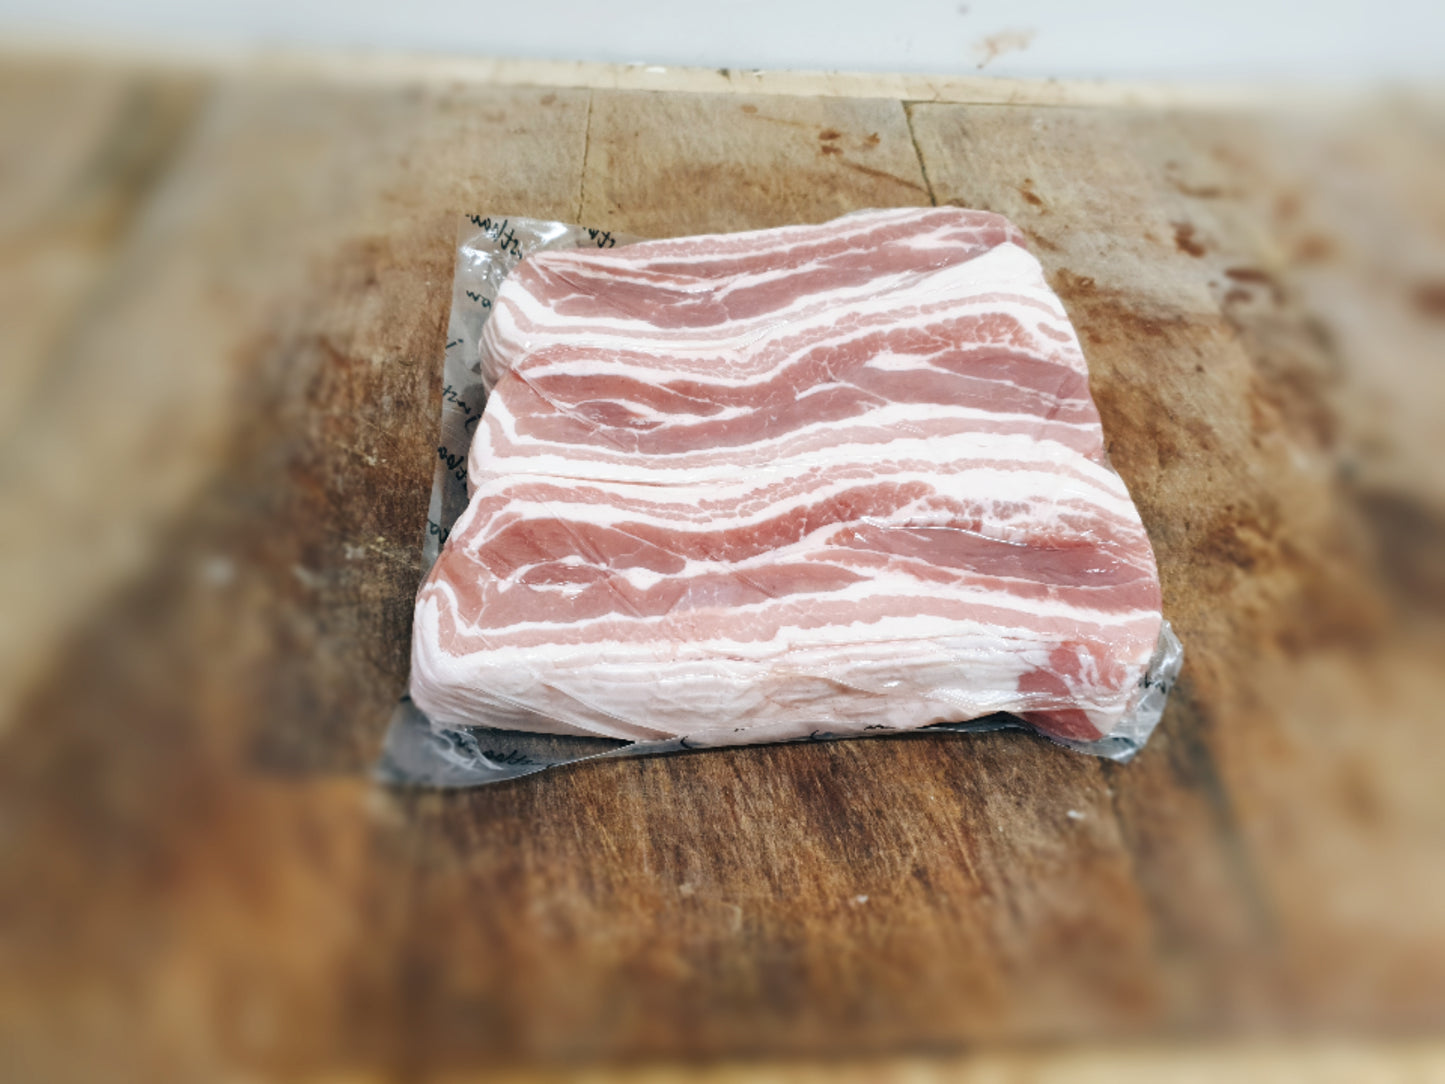 Rindless Streaky Bacon 2.25kg